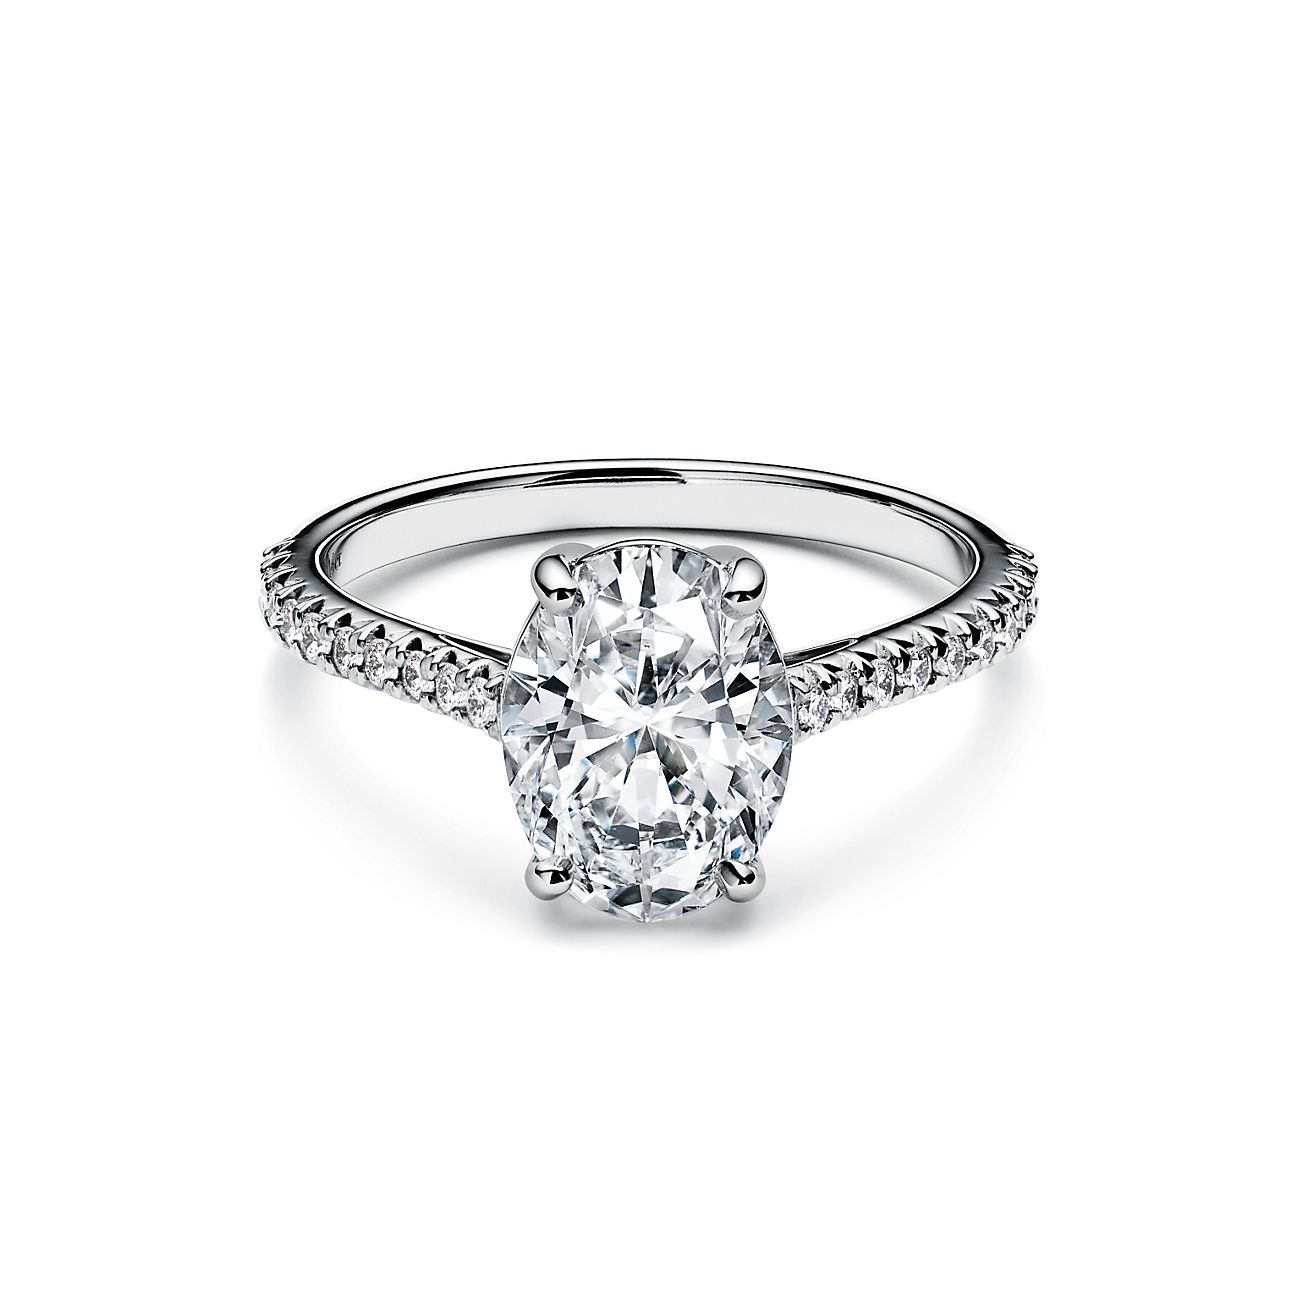 tiffany novo oval brilliant engagement ring with a pav diamond platinum band 70912392 1031925 ED.jpg?\u0026op usm\u003d1.75,1.0,6.0\u0026$cropN\u003d0.1,0.1,0.8,0